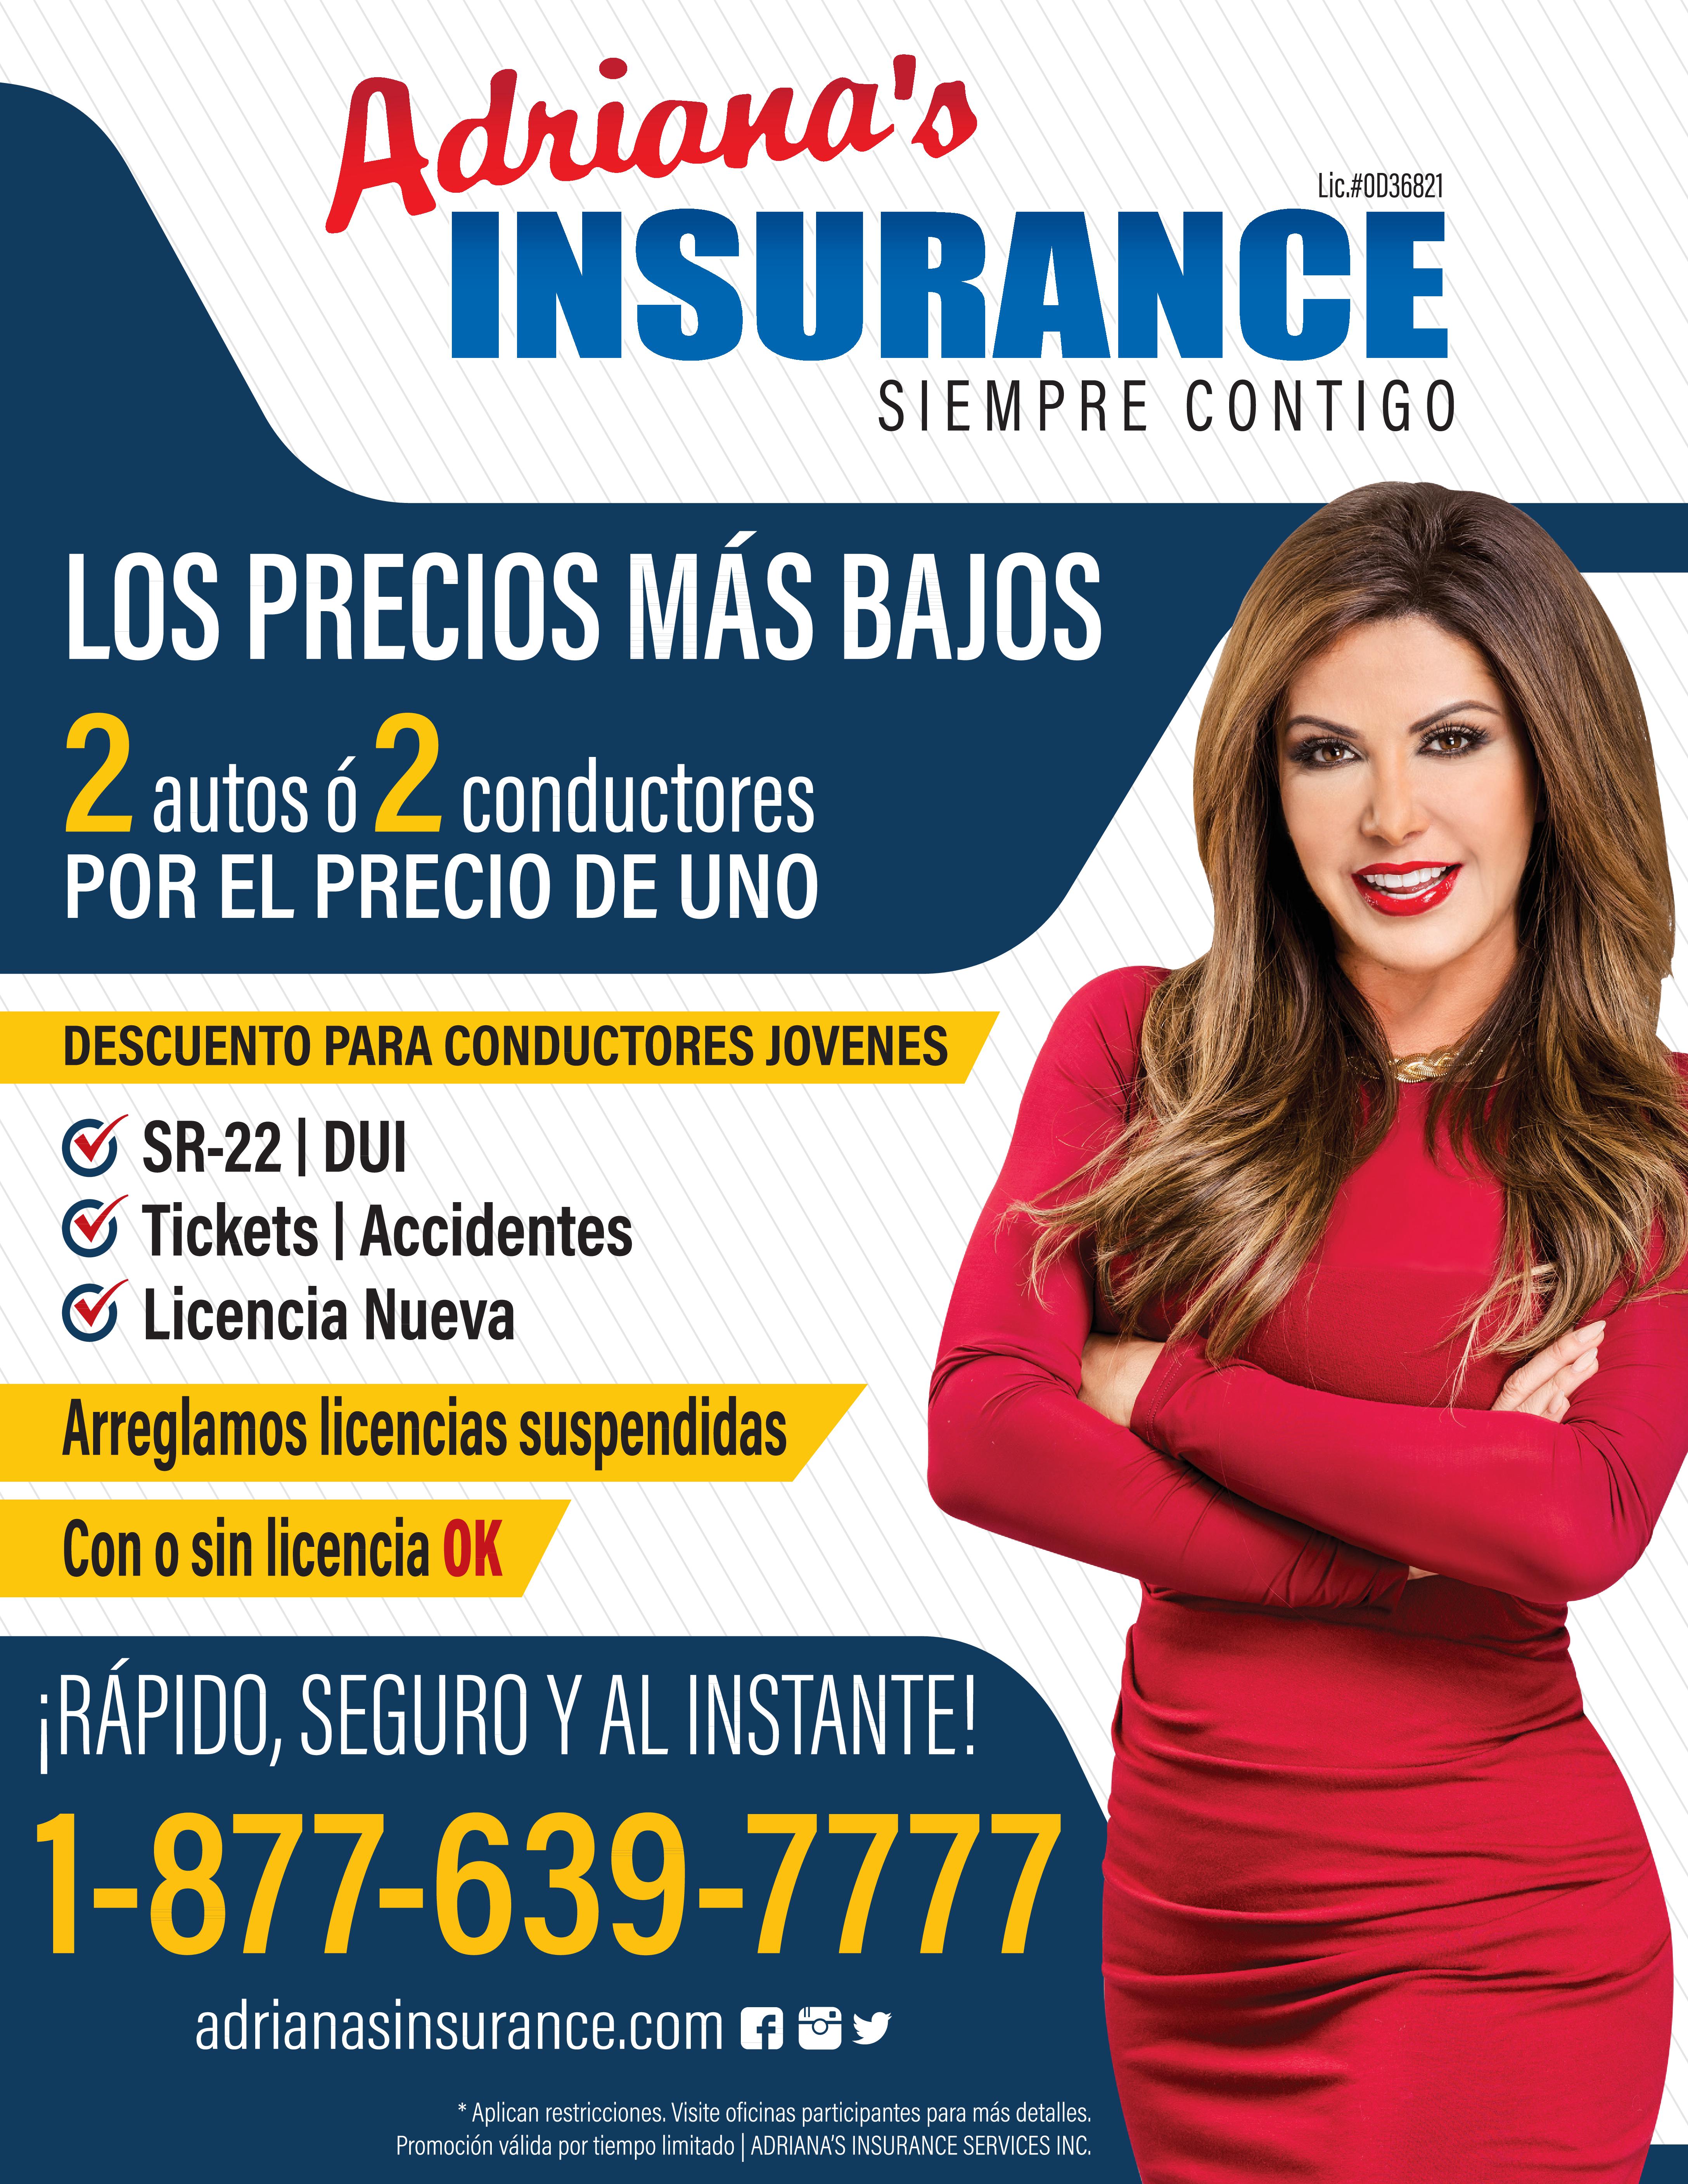 Adriana's Insurance